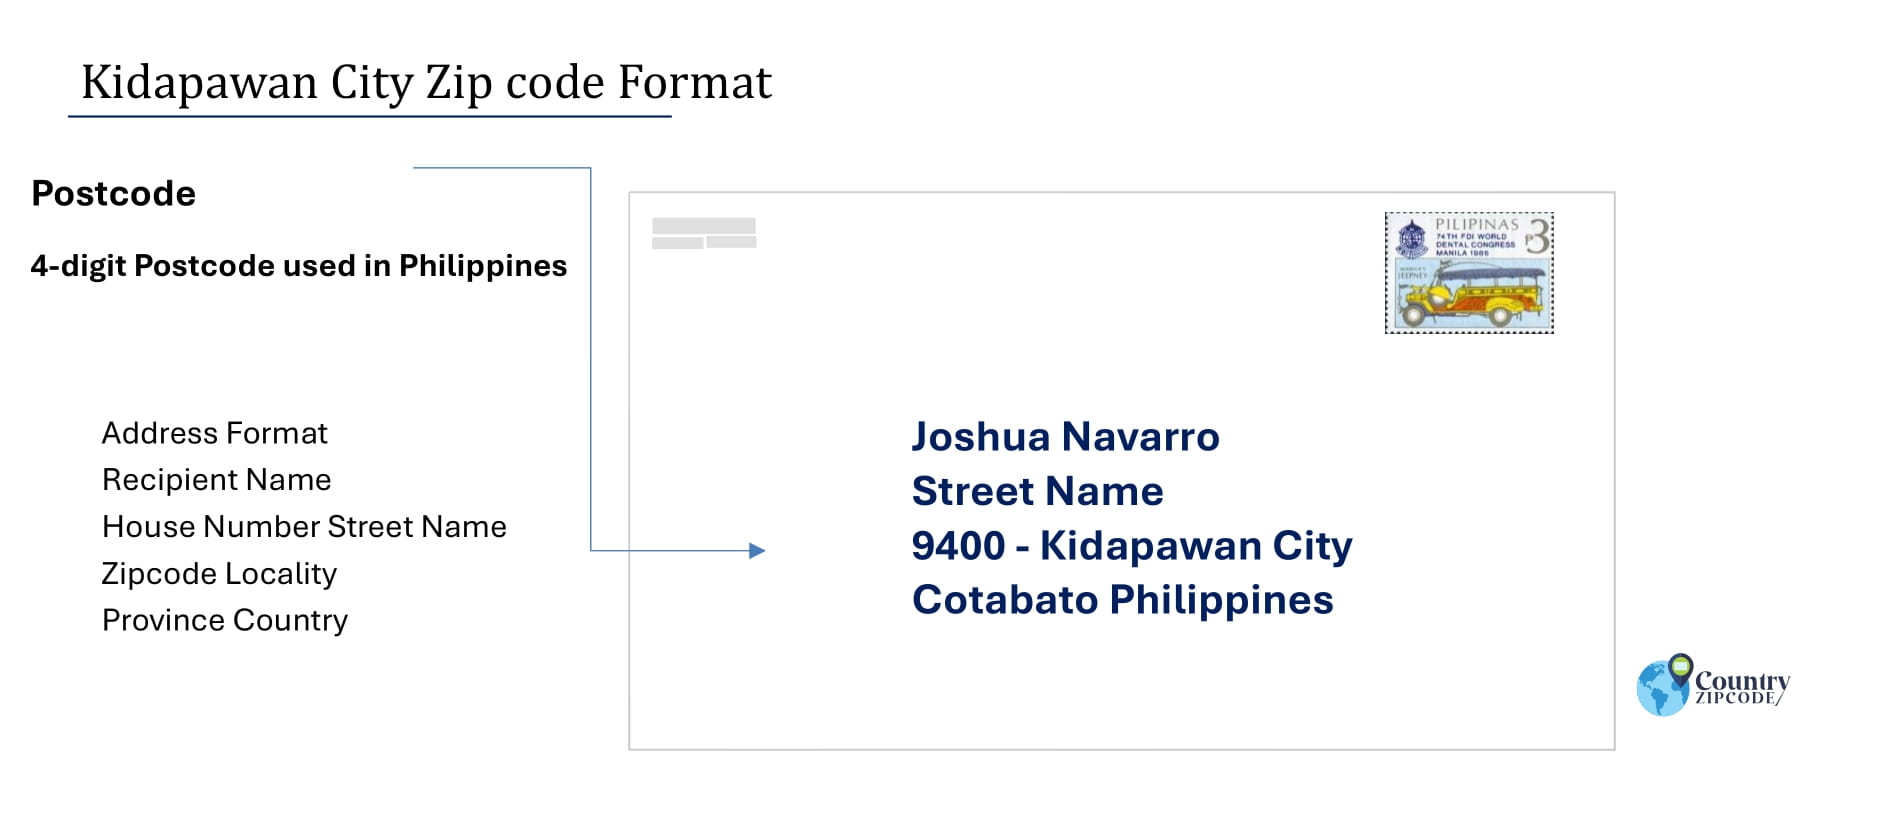 example of Kidapawan City Philippines zip code and address format